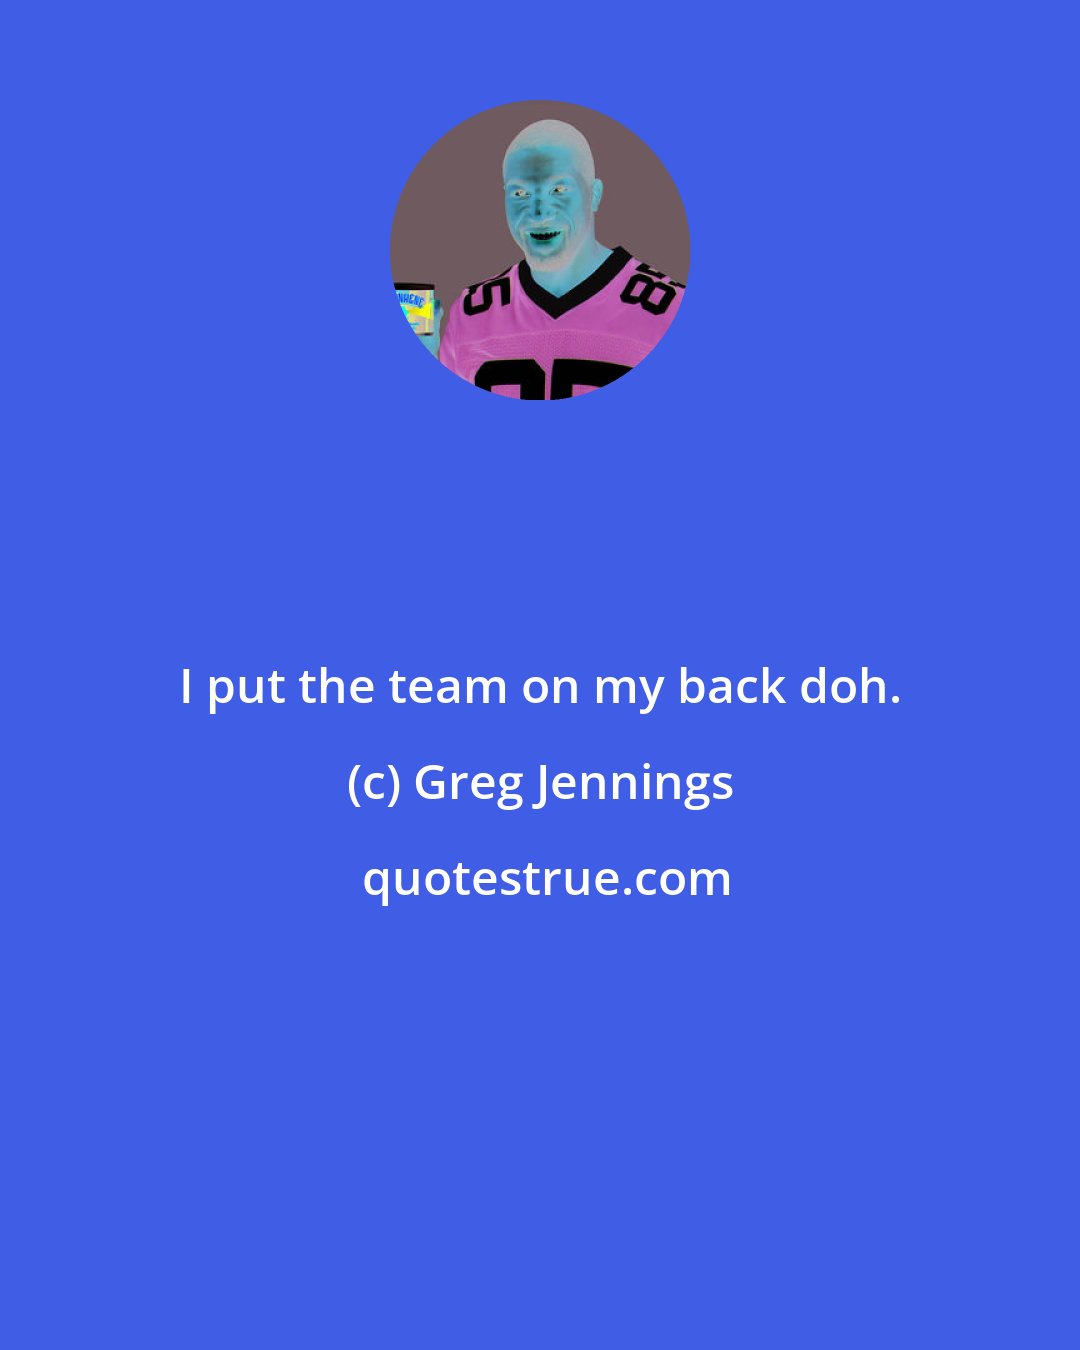 Greg Jennings: I put the team on my back doh.